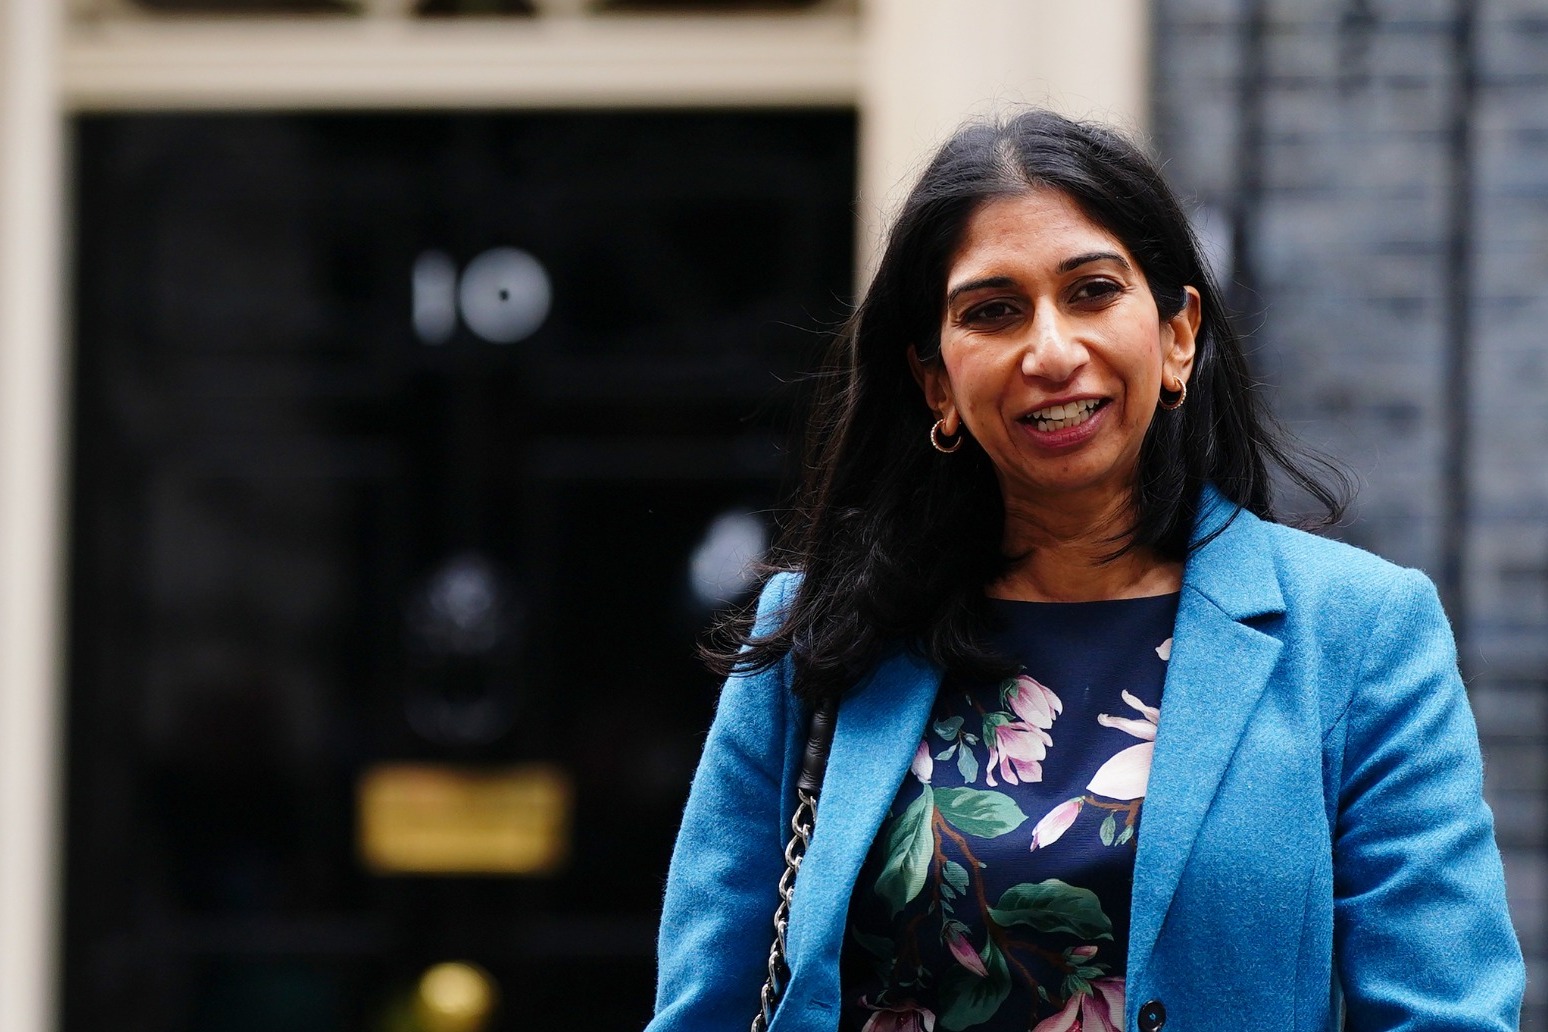 Inquiry demanded over Suella Braverman’s return as Home Secretary after breach 